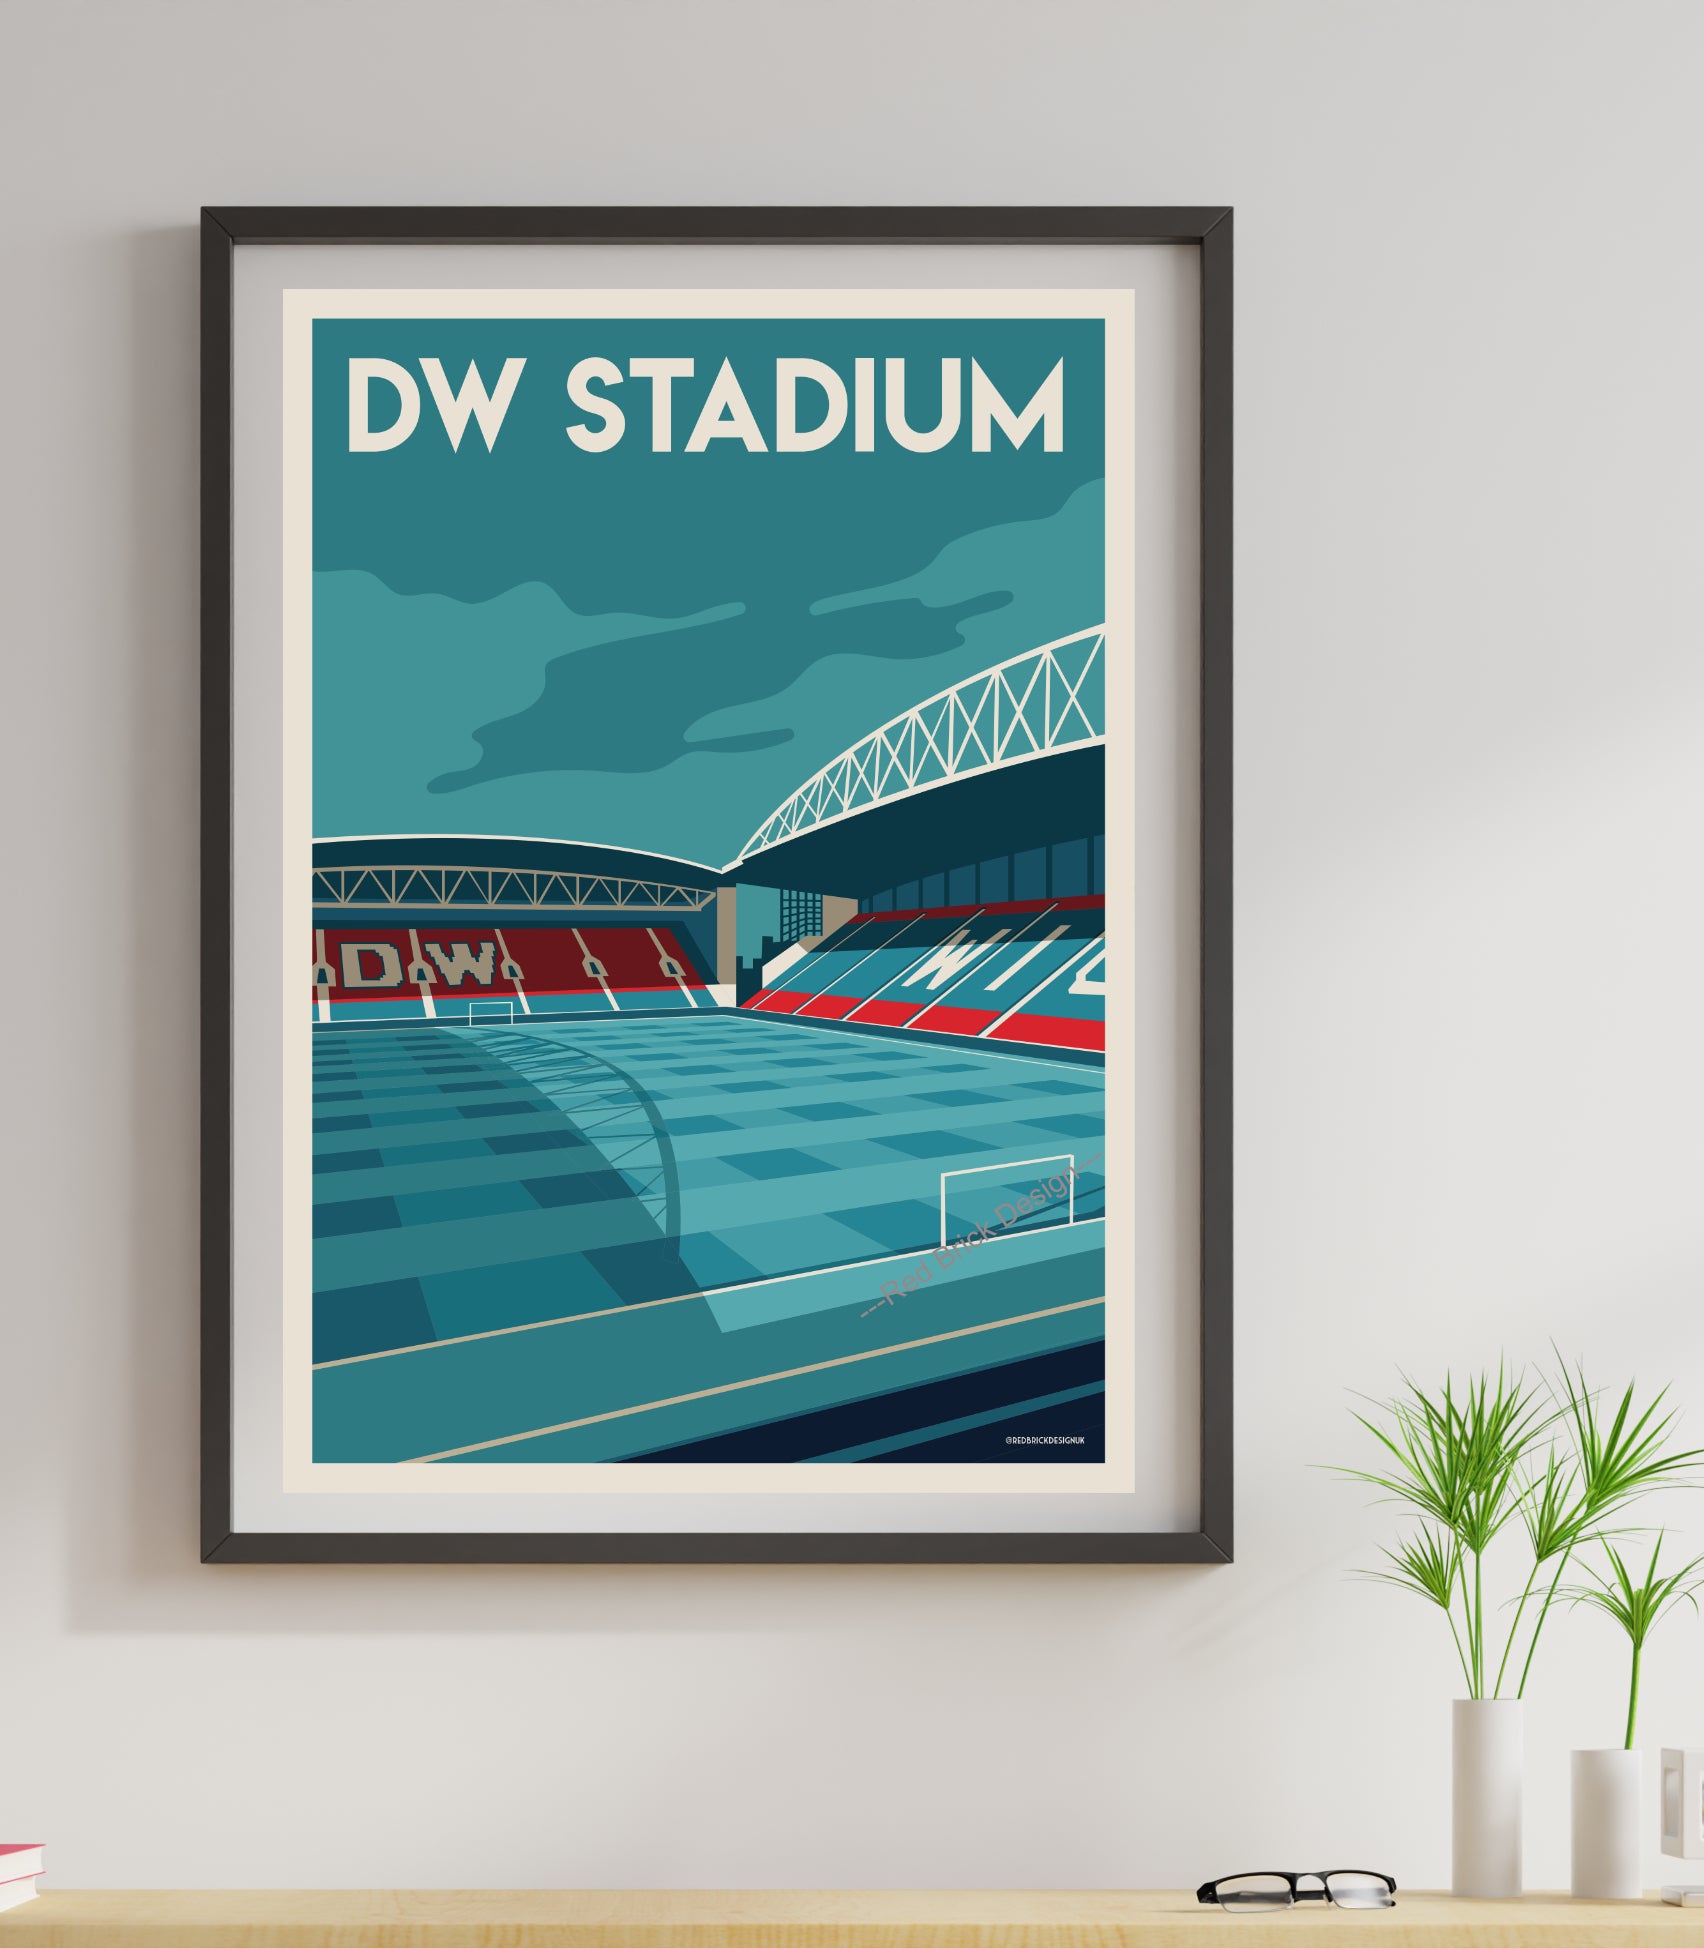 DW Stadium, Wigan Athletic Retro Art Print Poster | Football Memorabilia poster artwork